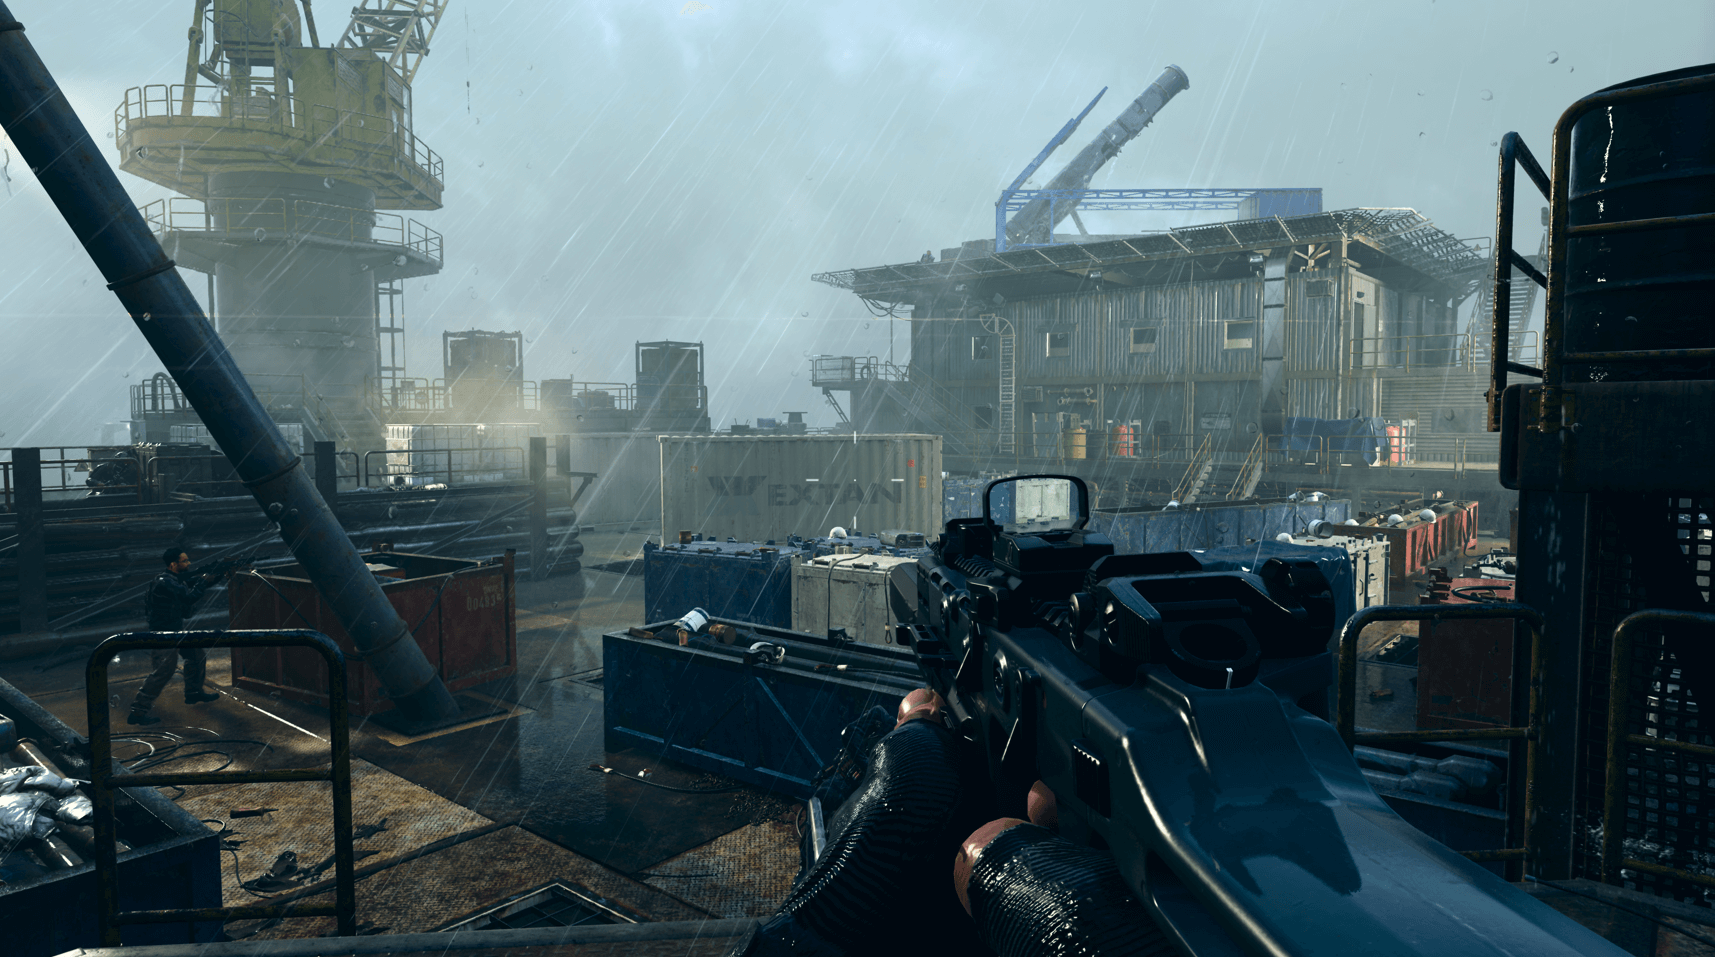 ANÁLISE: Call of Duty: Advanced Warfare